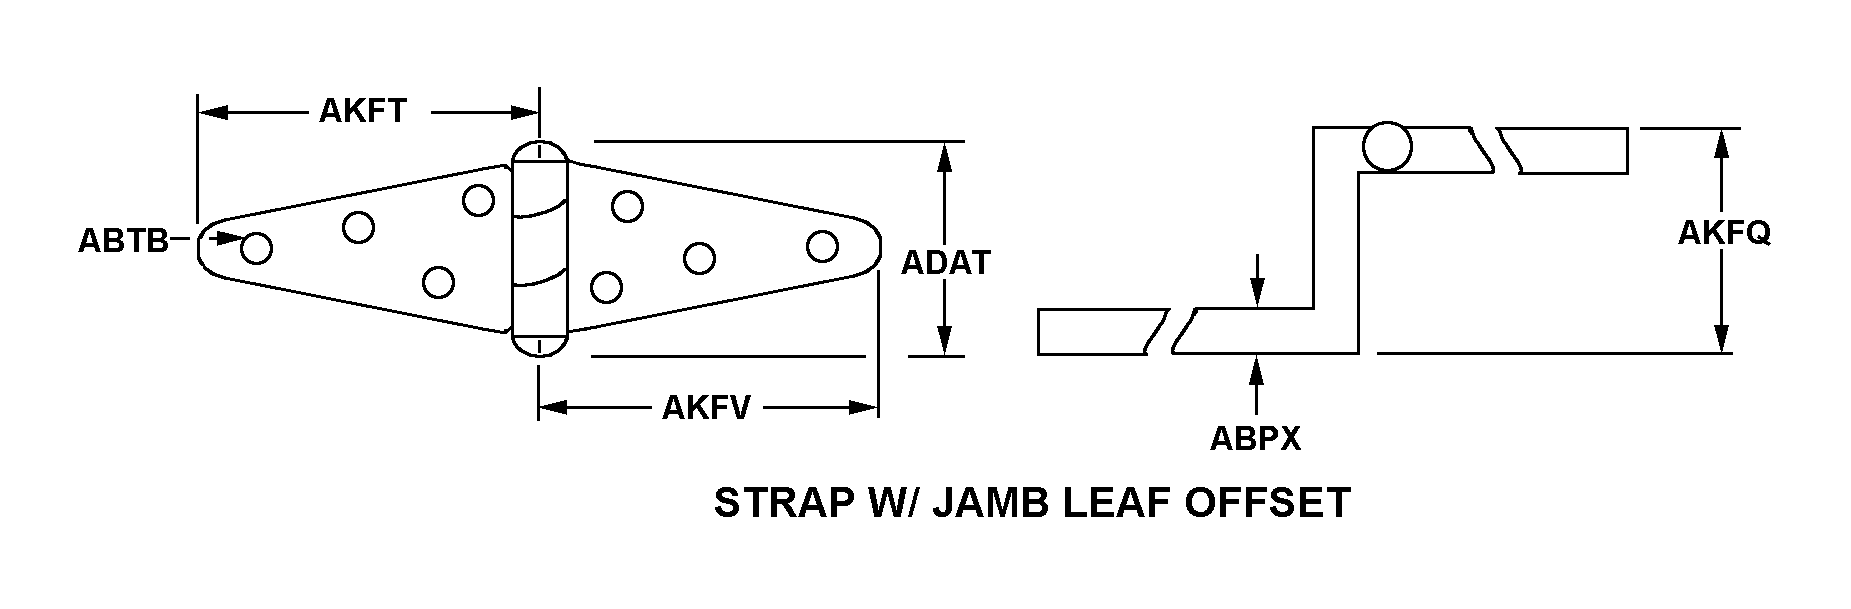 STRAP W/JAMB LEAF OFFSET style nsn 5340-01-624-2224